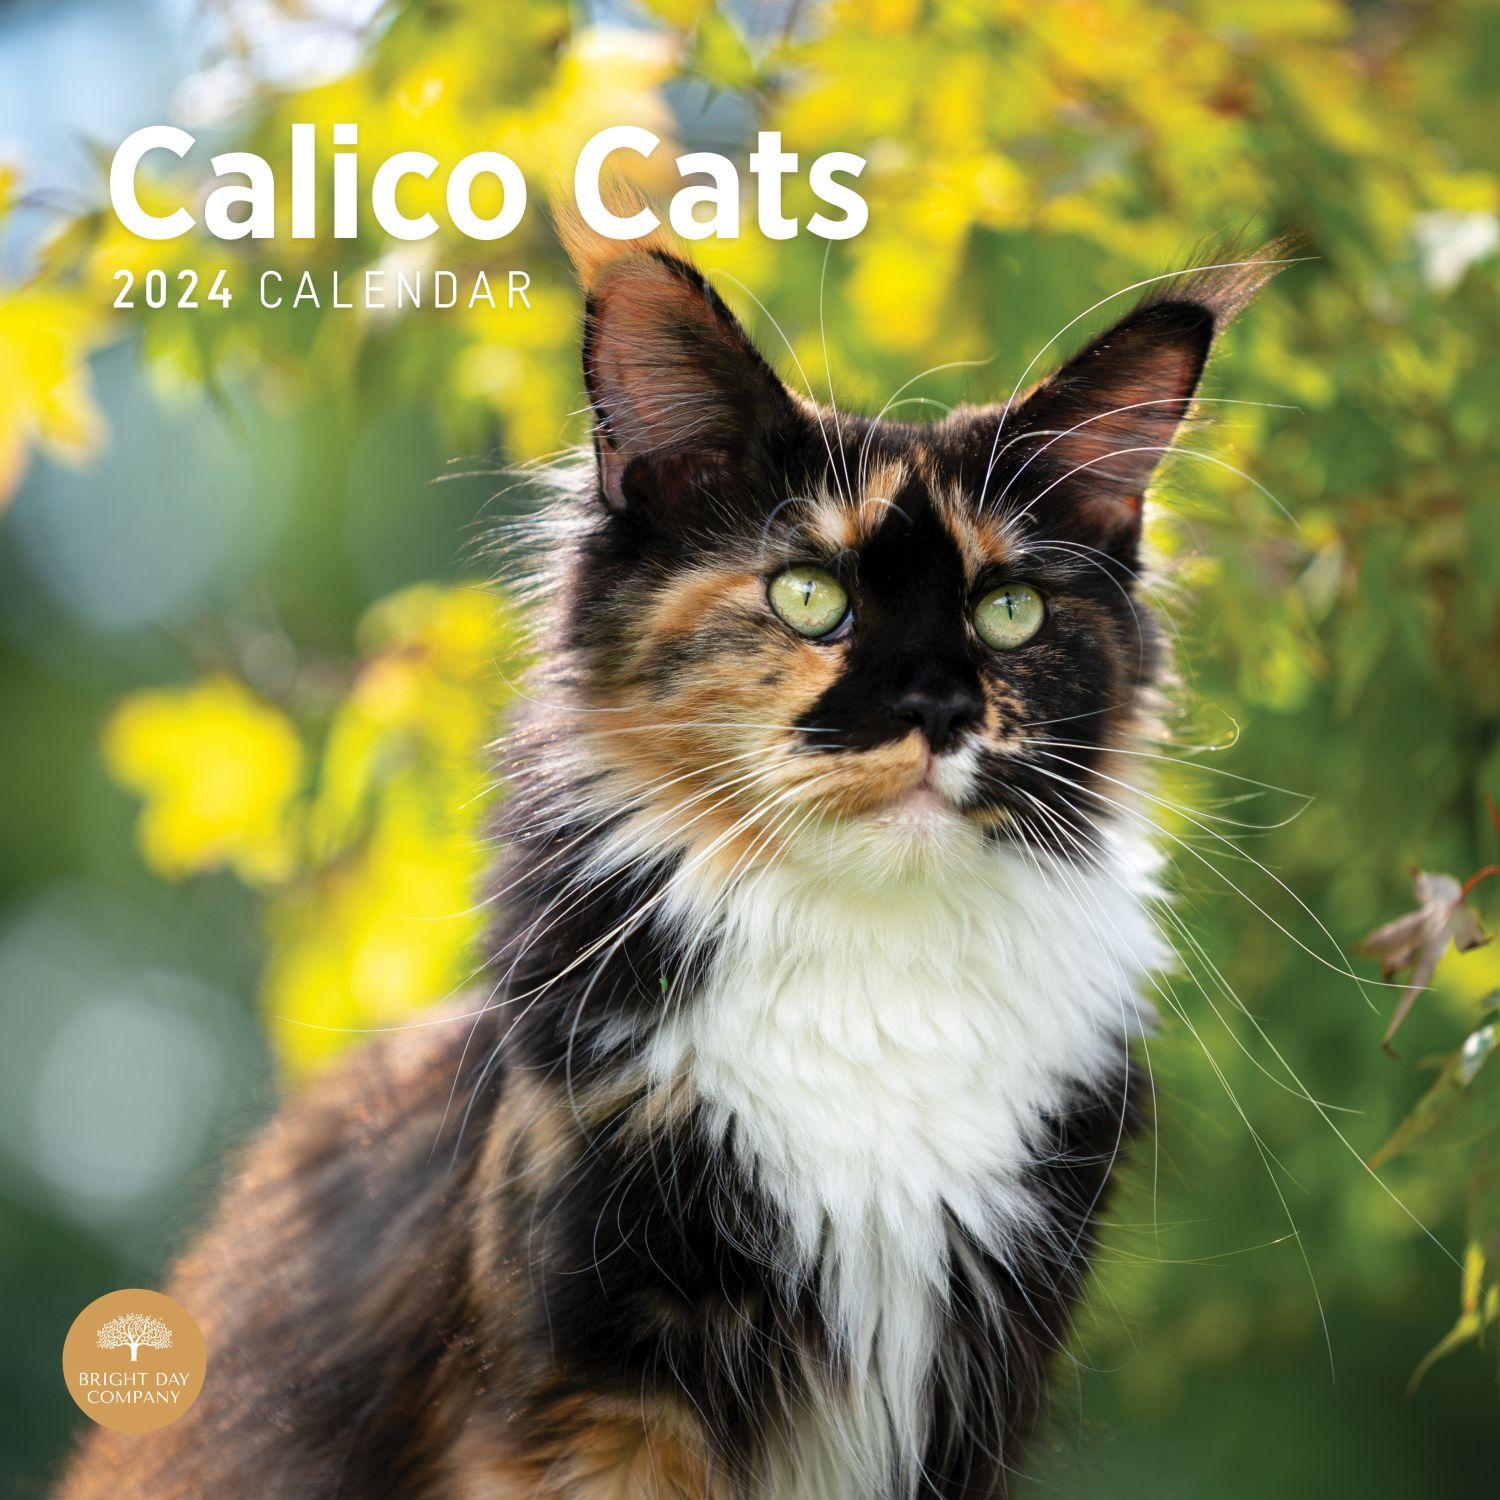 Calico Cats 2024 Wall Calendar